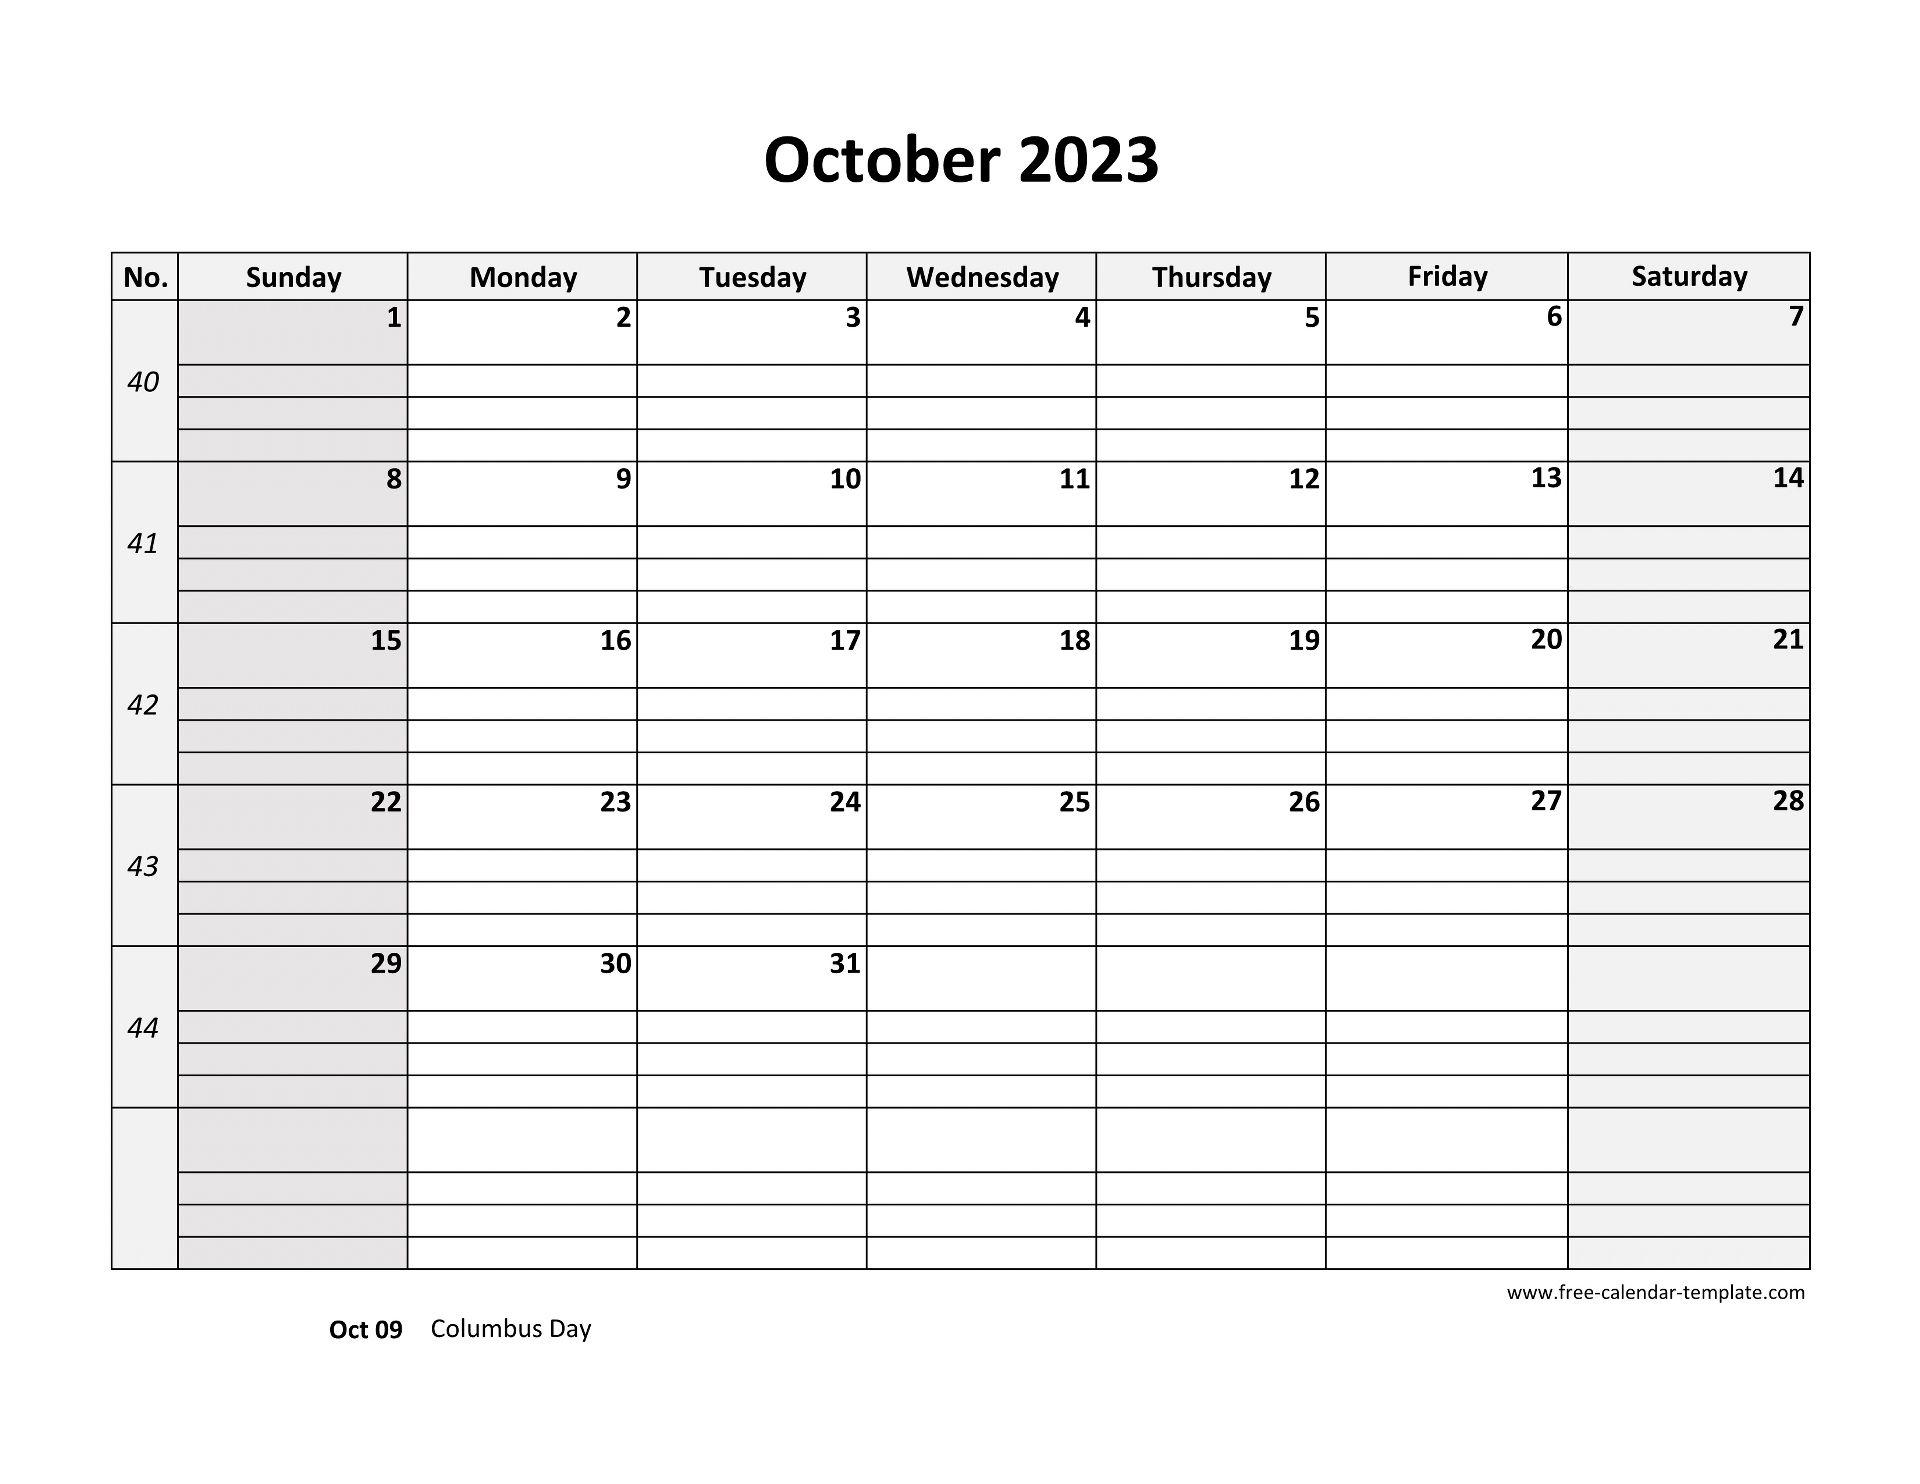 October 2023 Free Calendar Tempplate